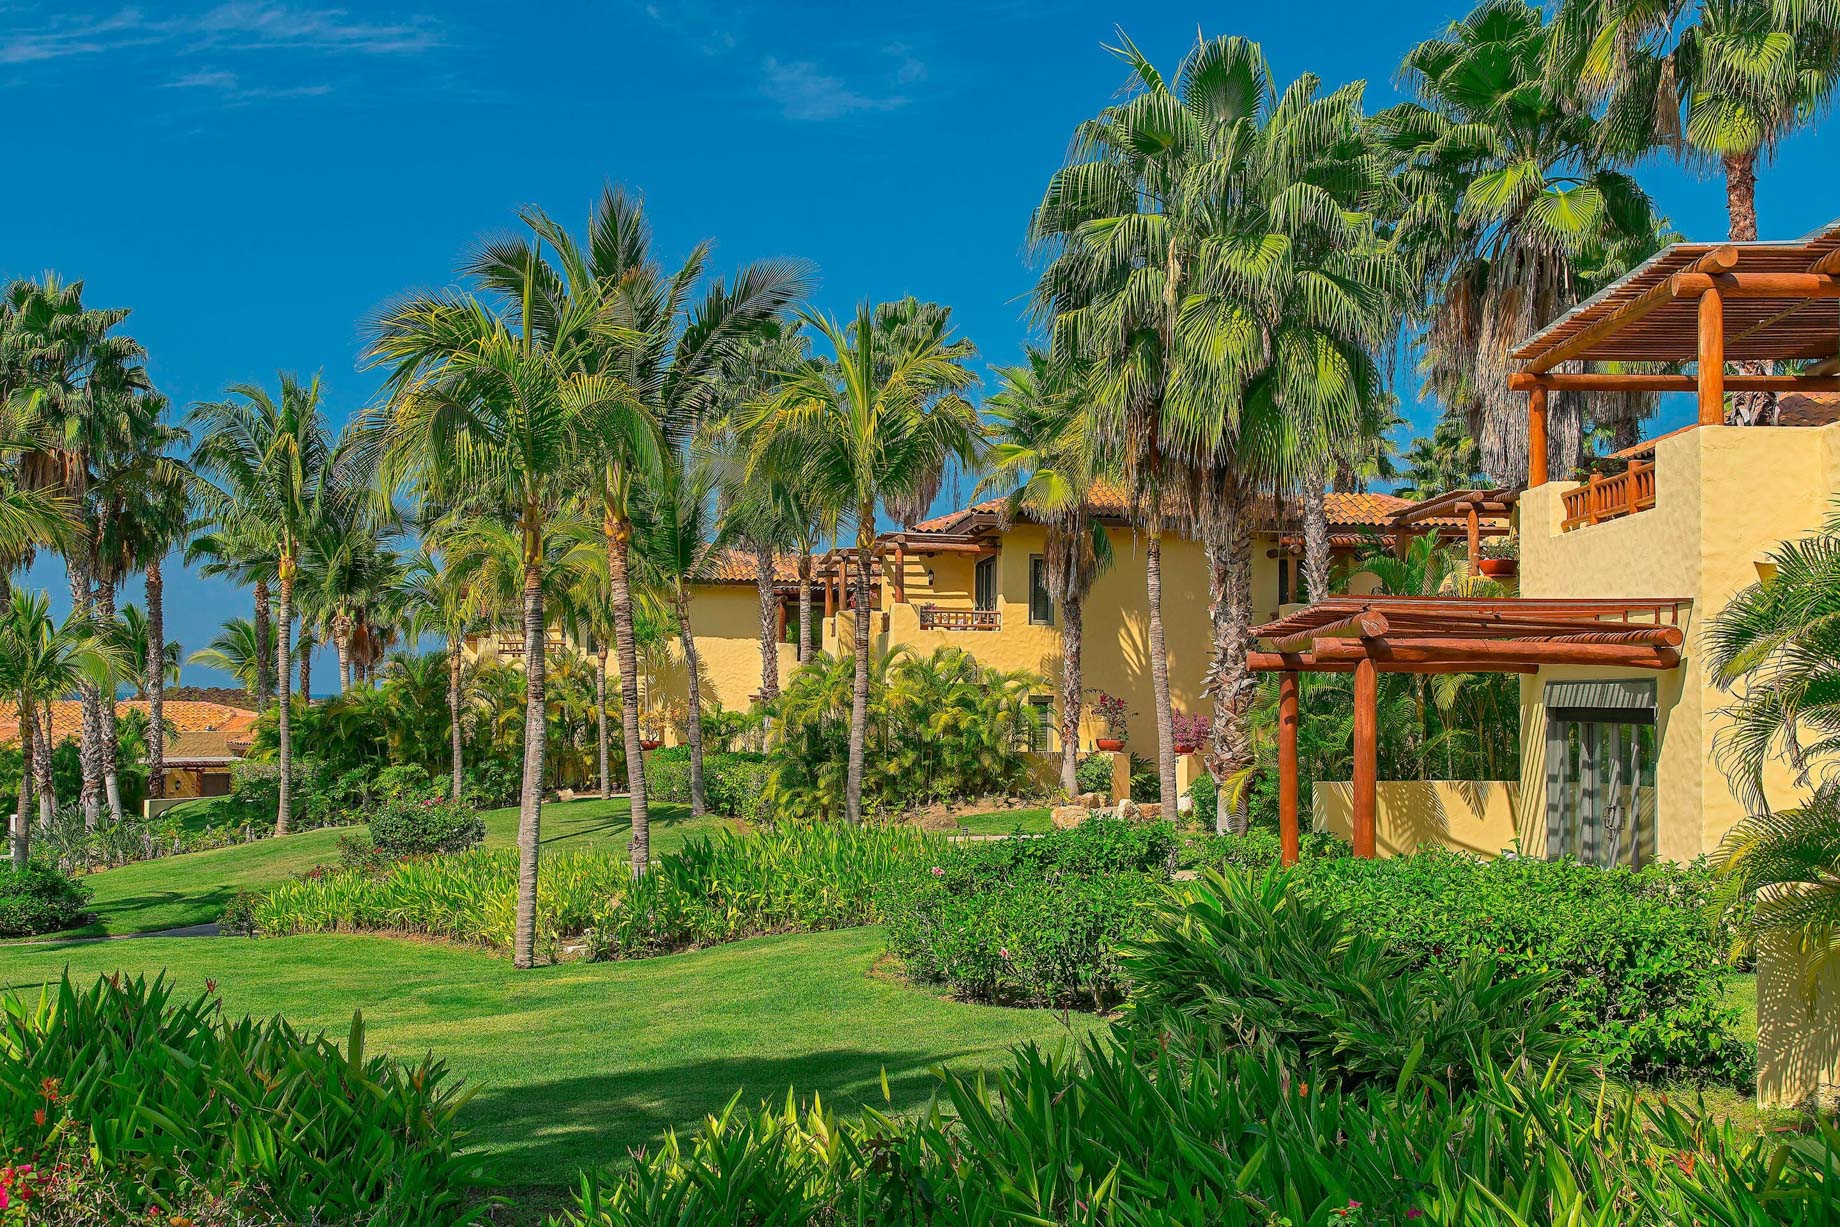 The St. Regis Punta Mita Resort – Nayarit, Mexico – Hotel Grounds View